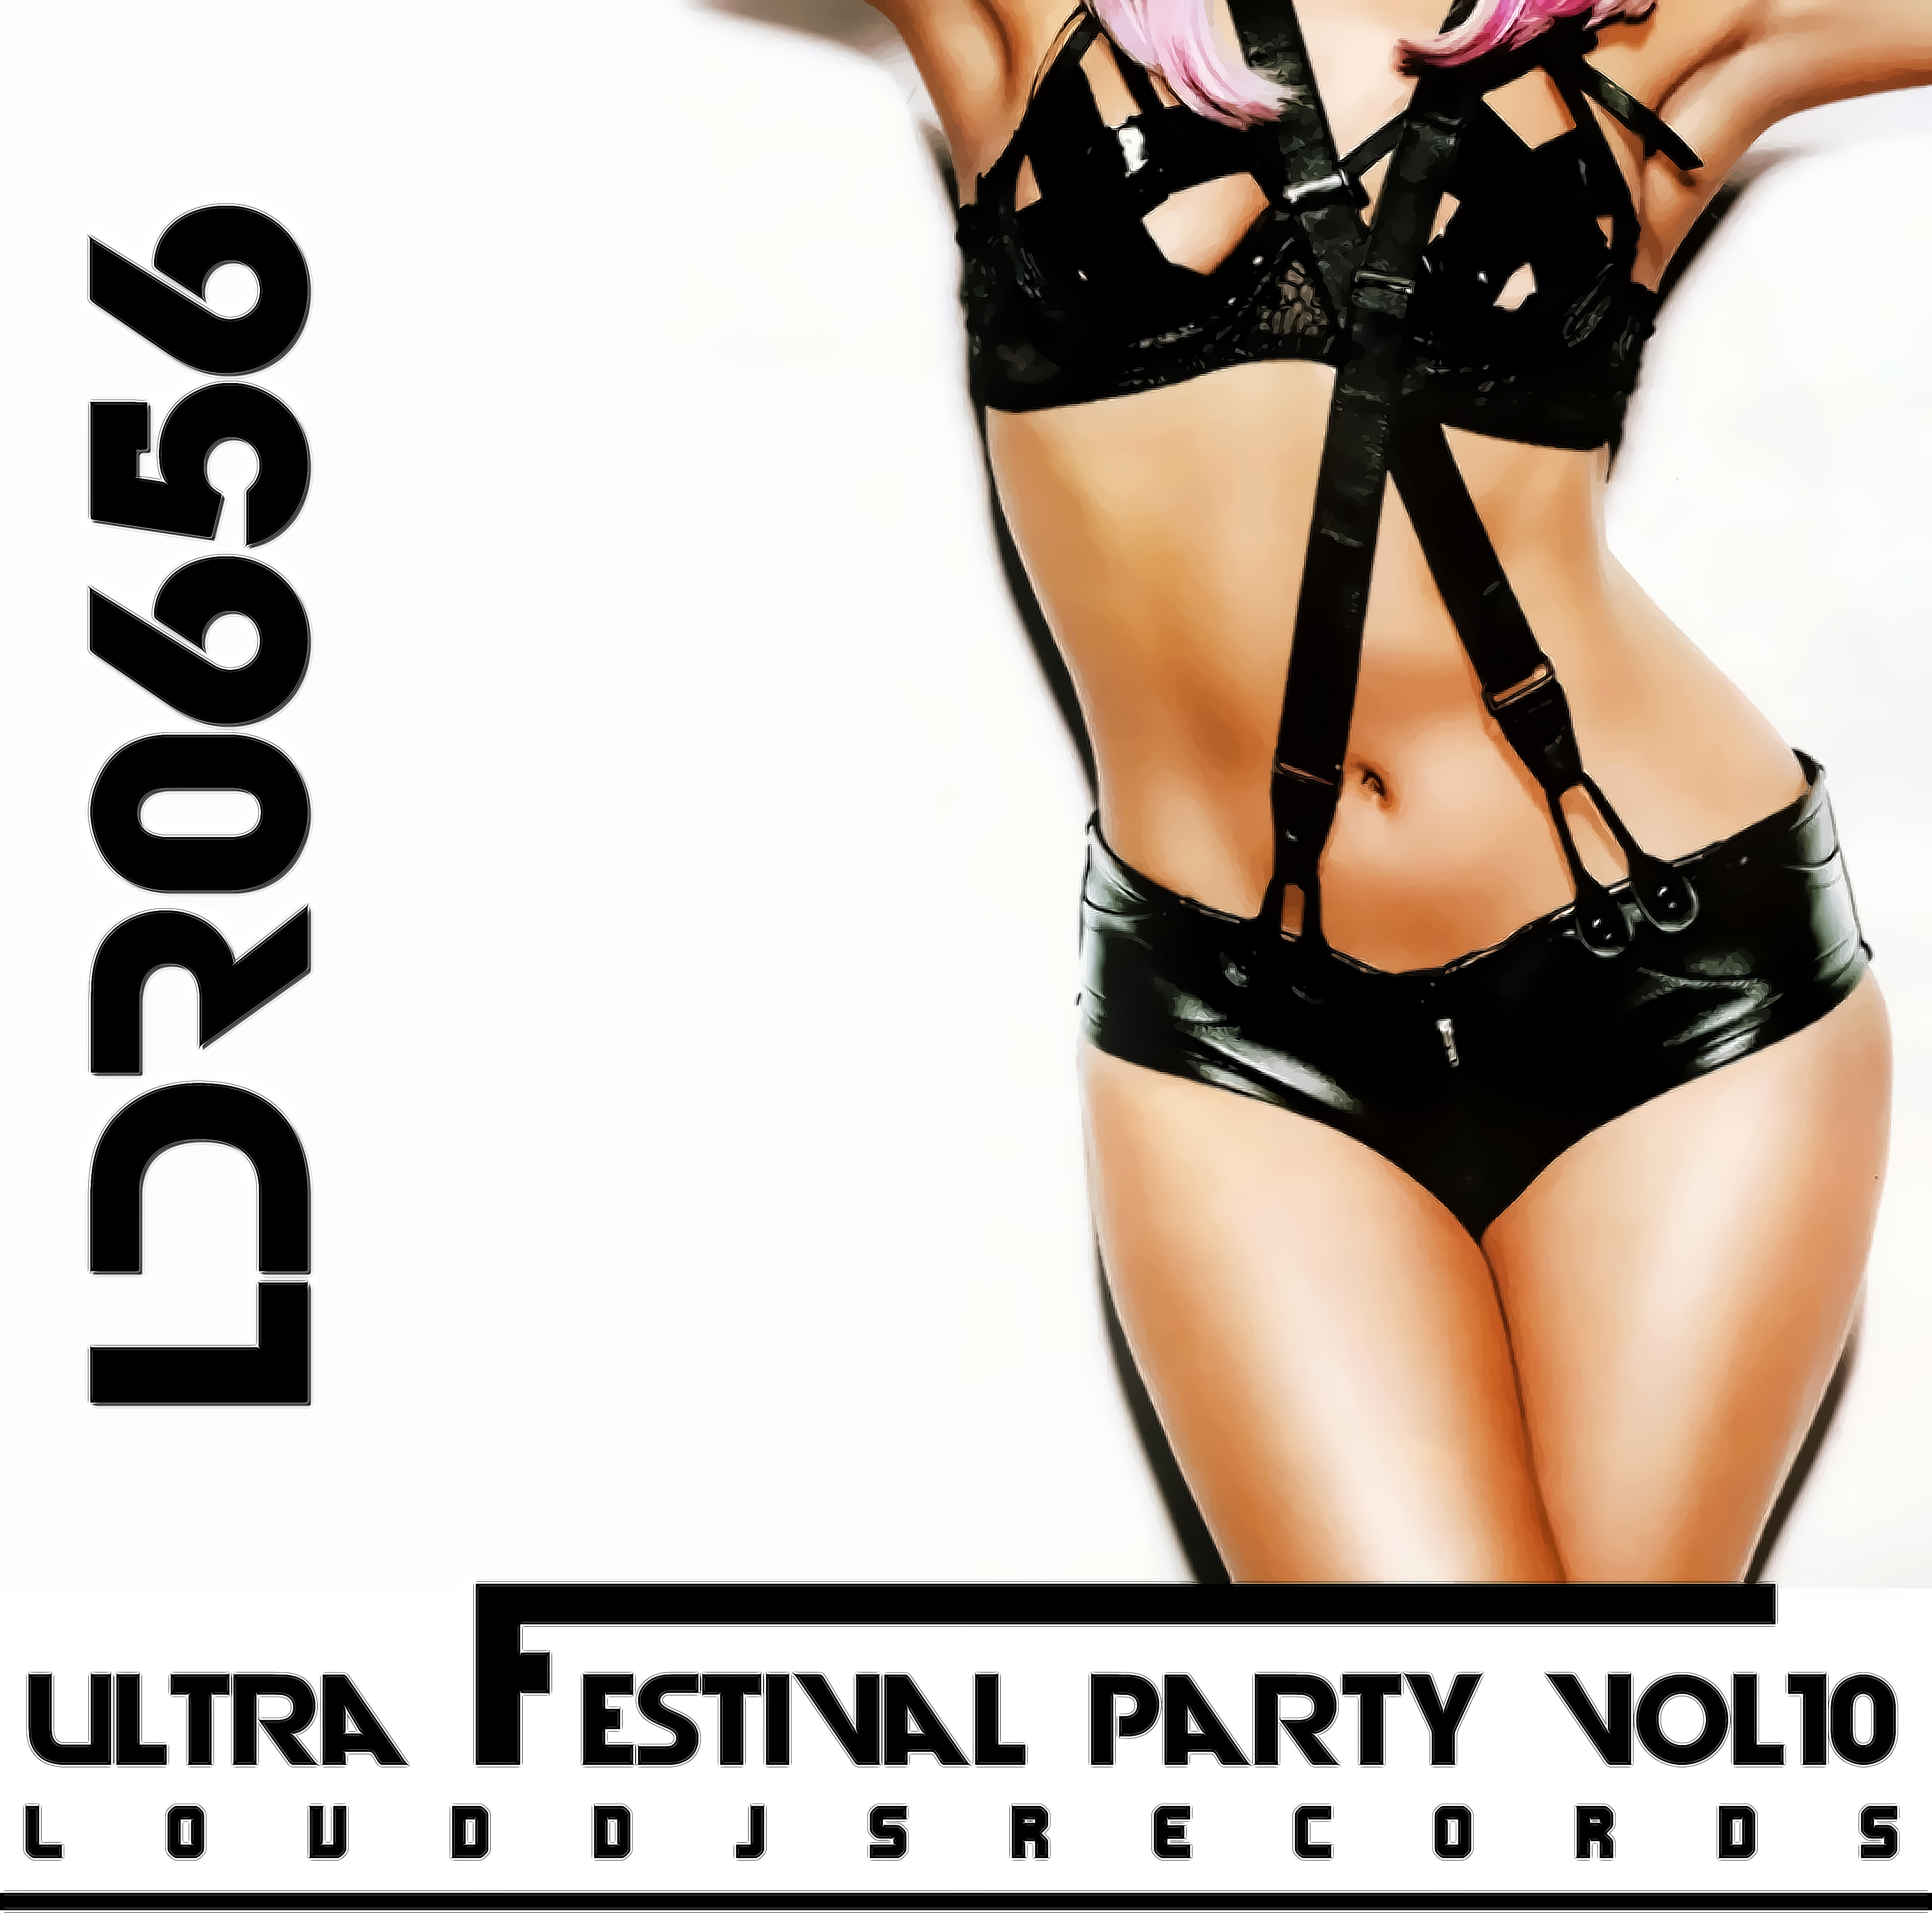 Ultra Festival Party, Vol. 10